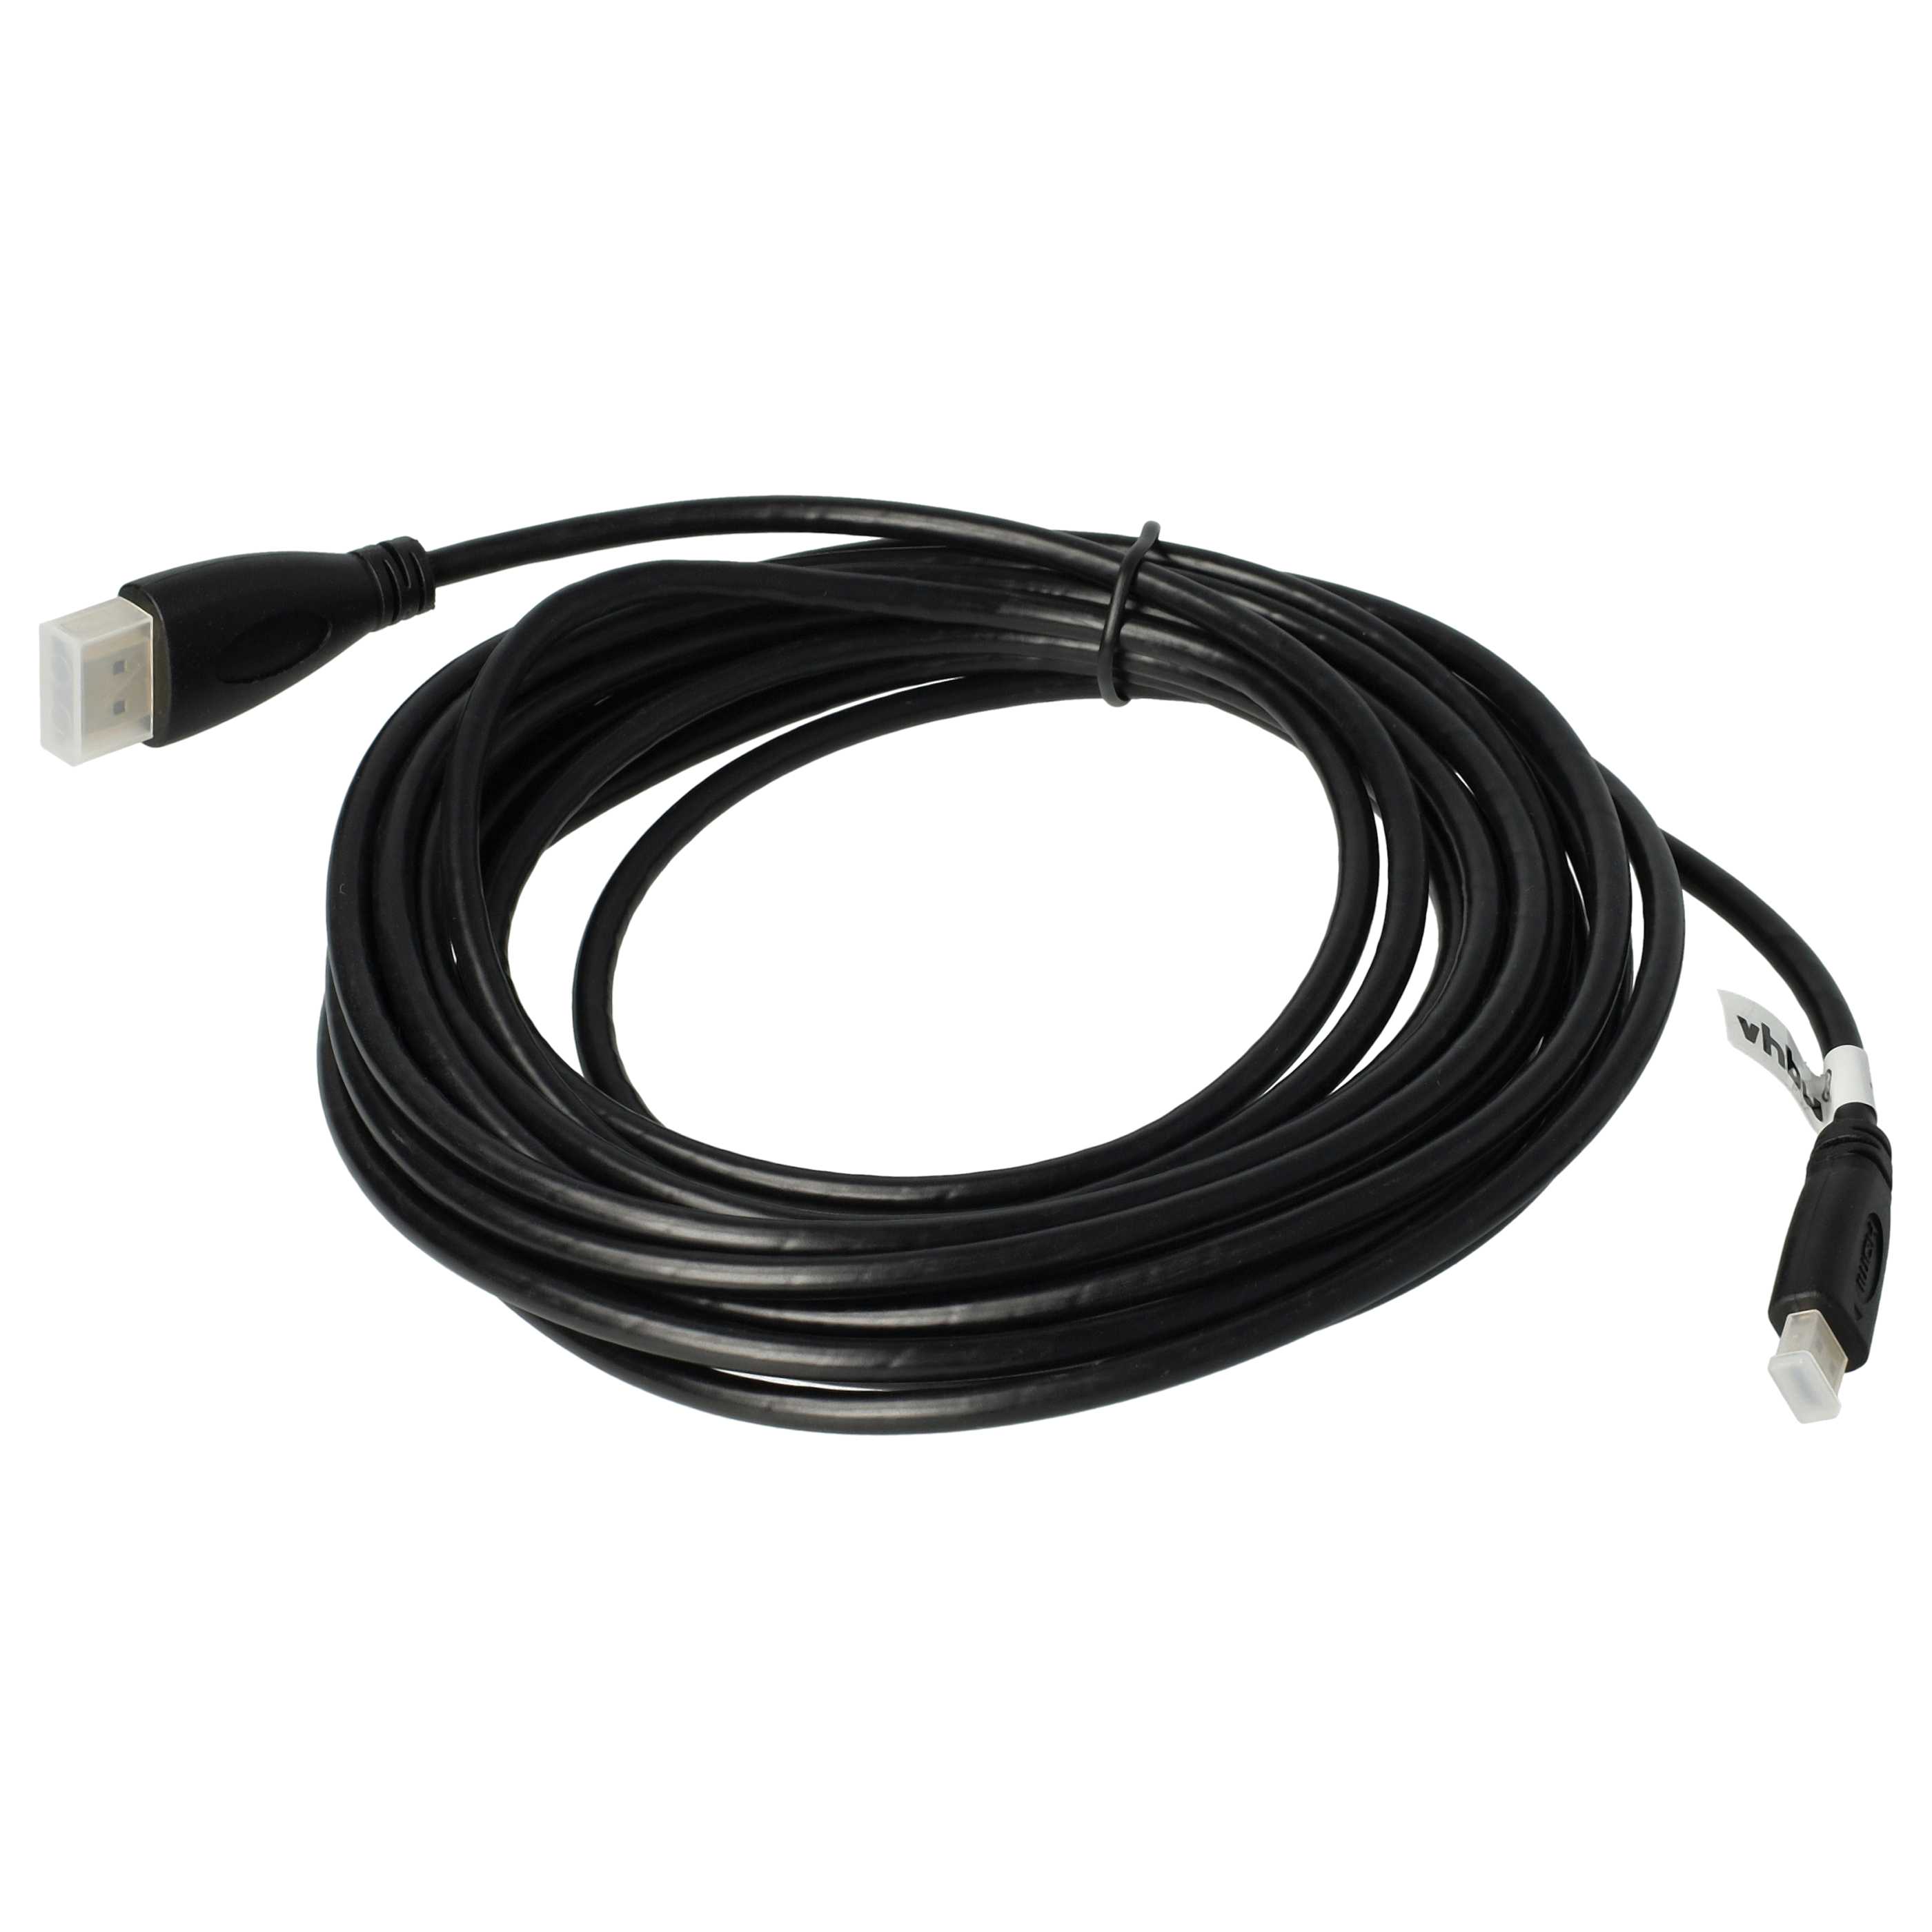 Câble HDMI, Micro-HDMI vers HDMI 1.4 5m pour Tablette, Smartphone, appareil photo